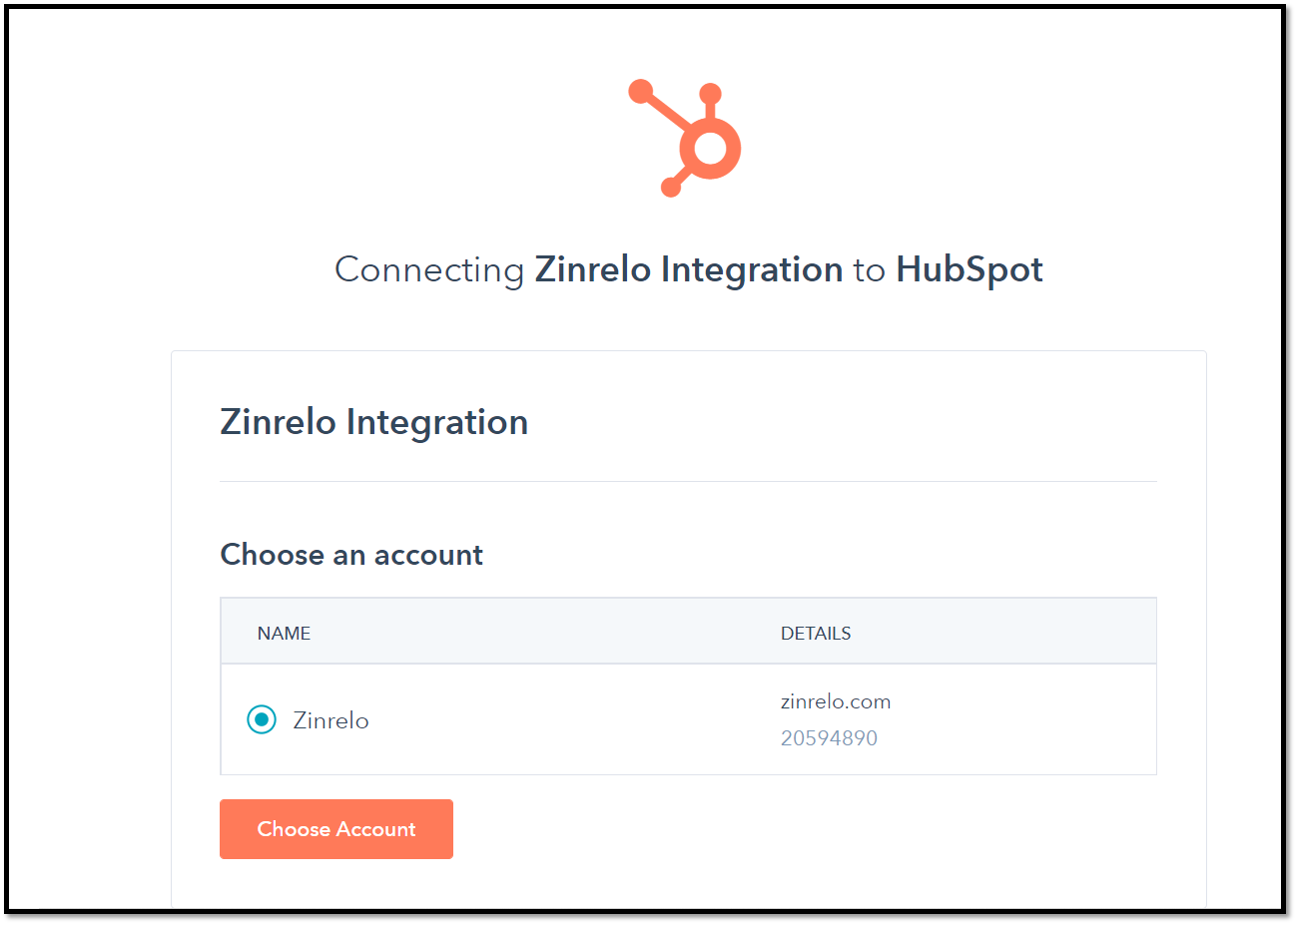 Zinrelo and HubSpot Integration